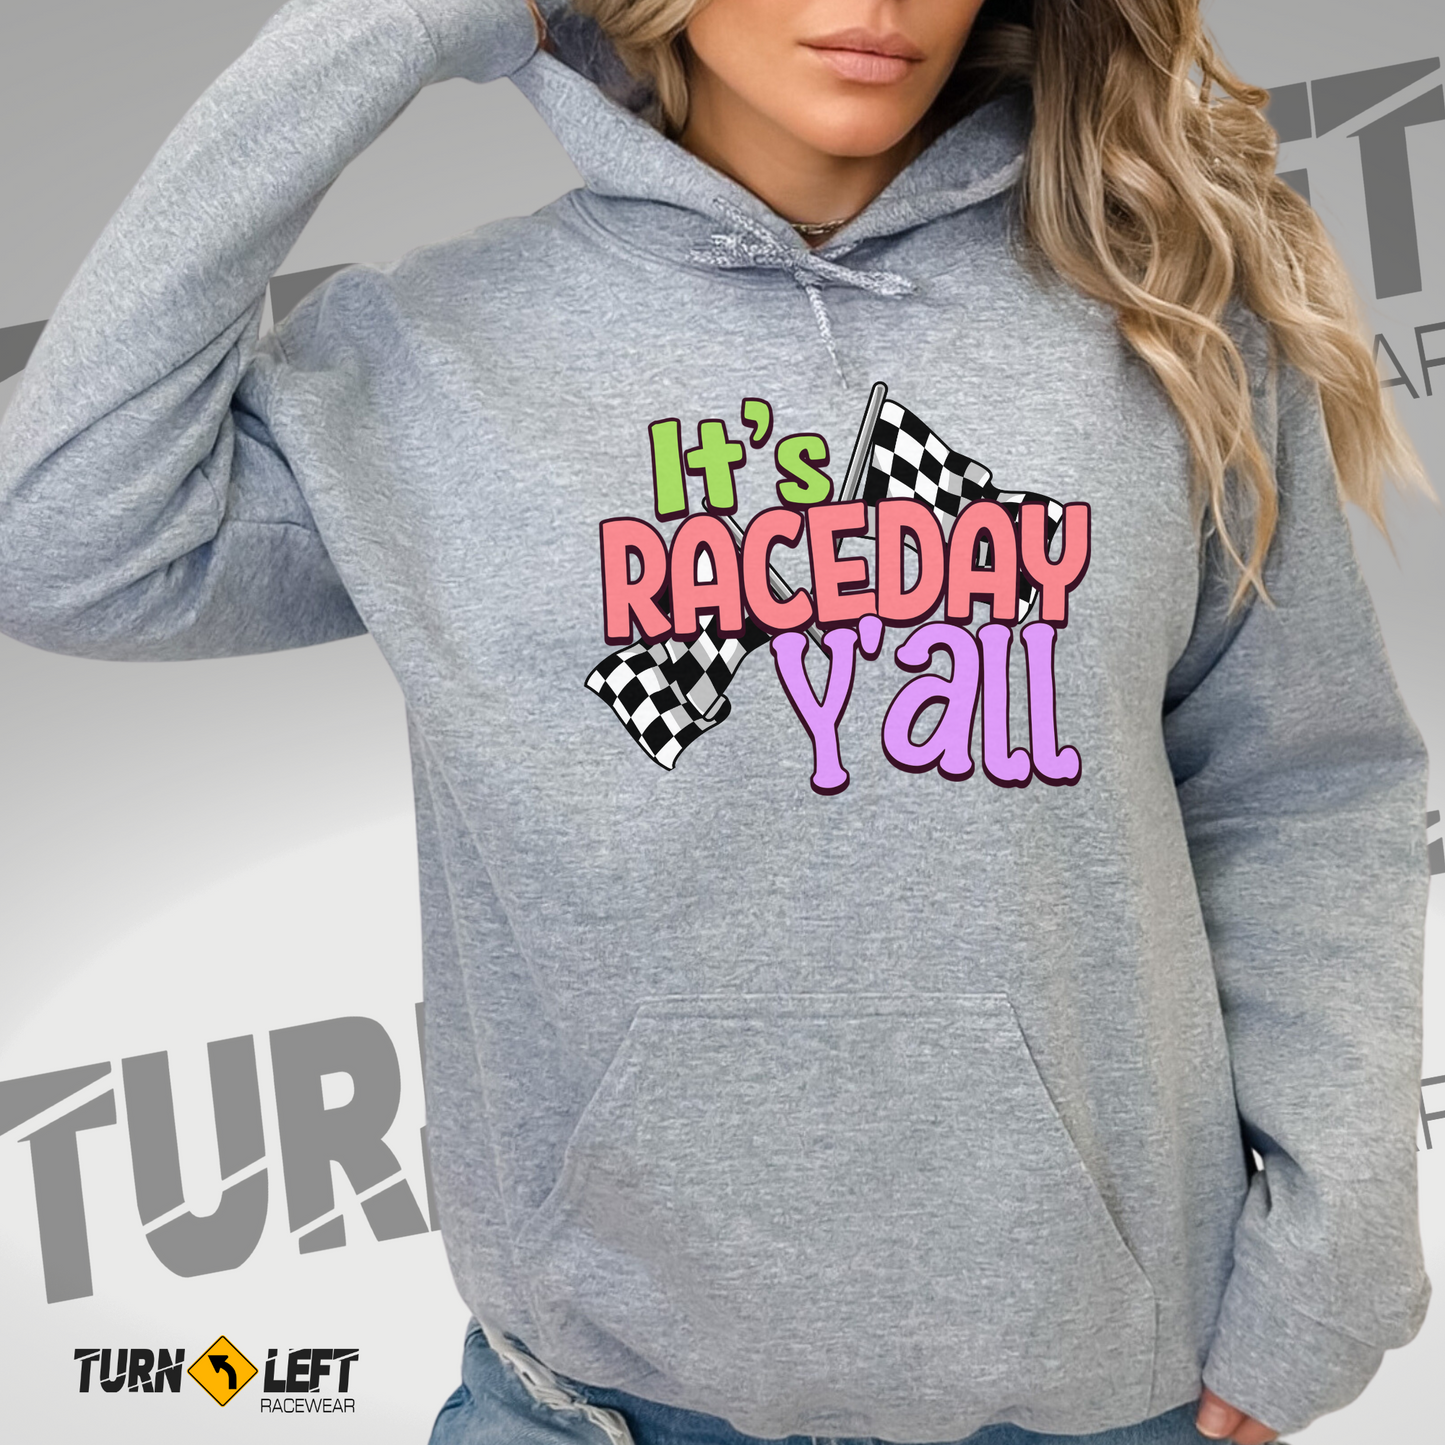 Checker Flag Racing Hoodies It's Raceday Y'all Sweatshirts. Women's dirt track racing sweatshirts